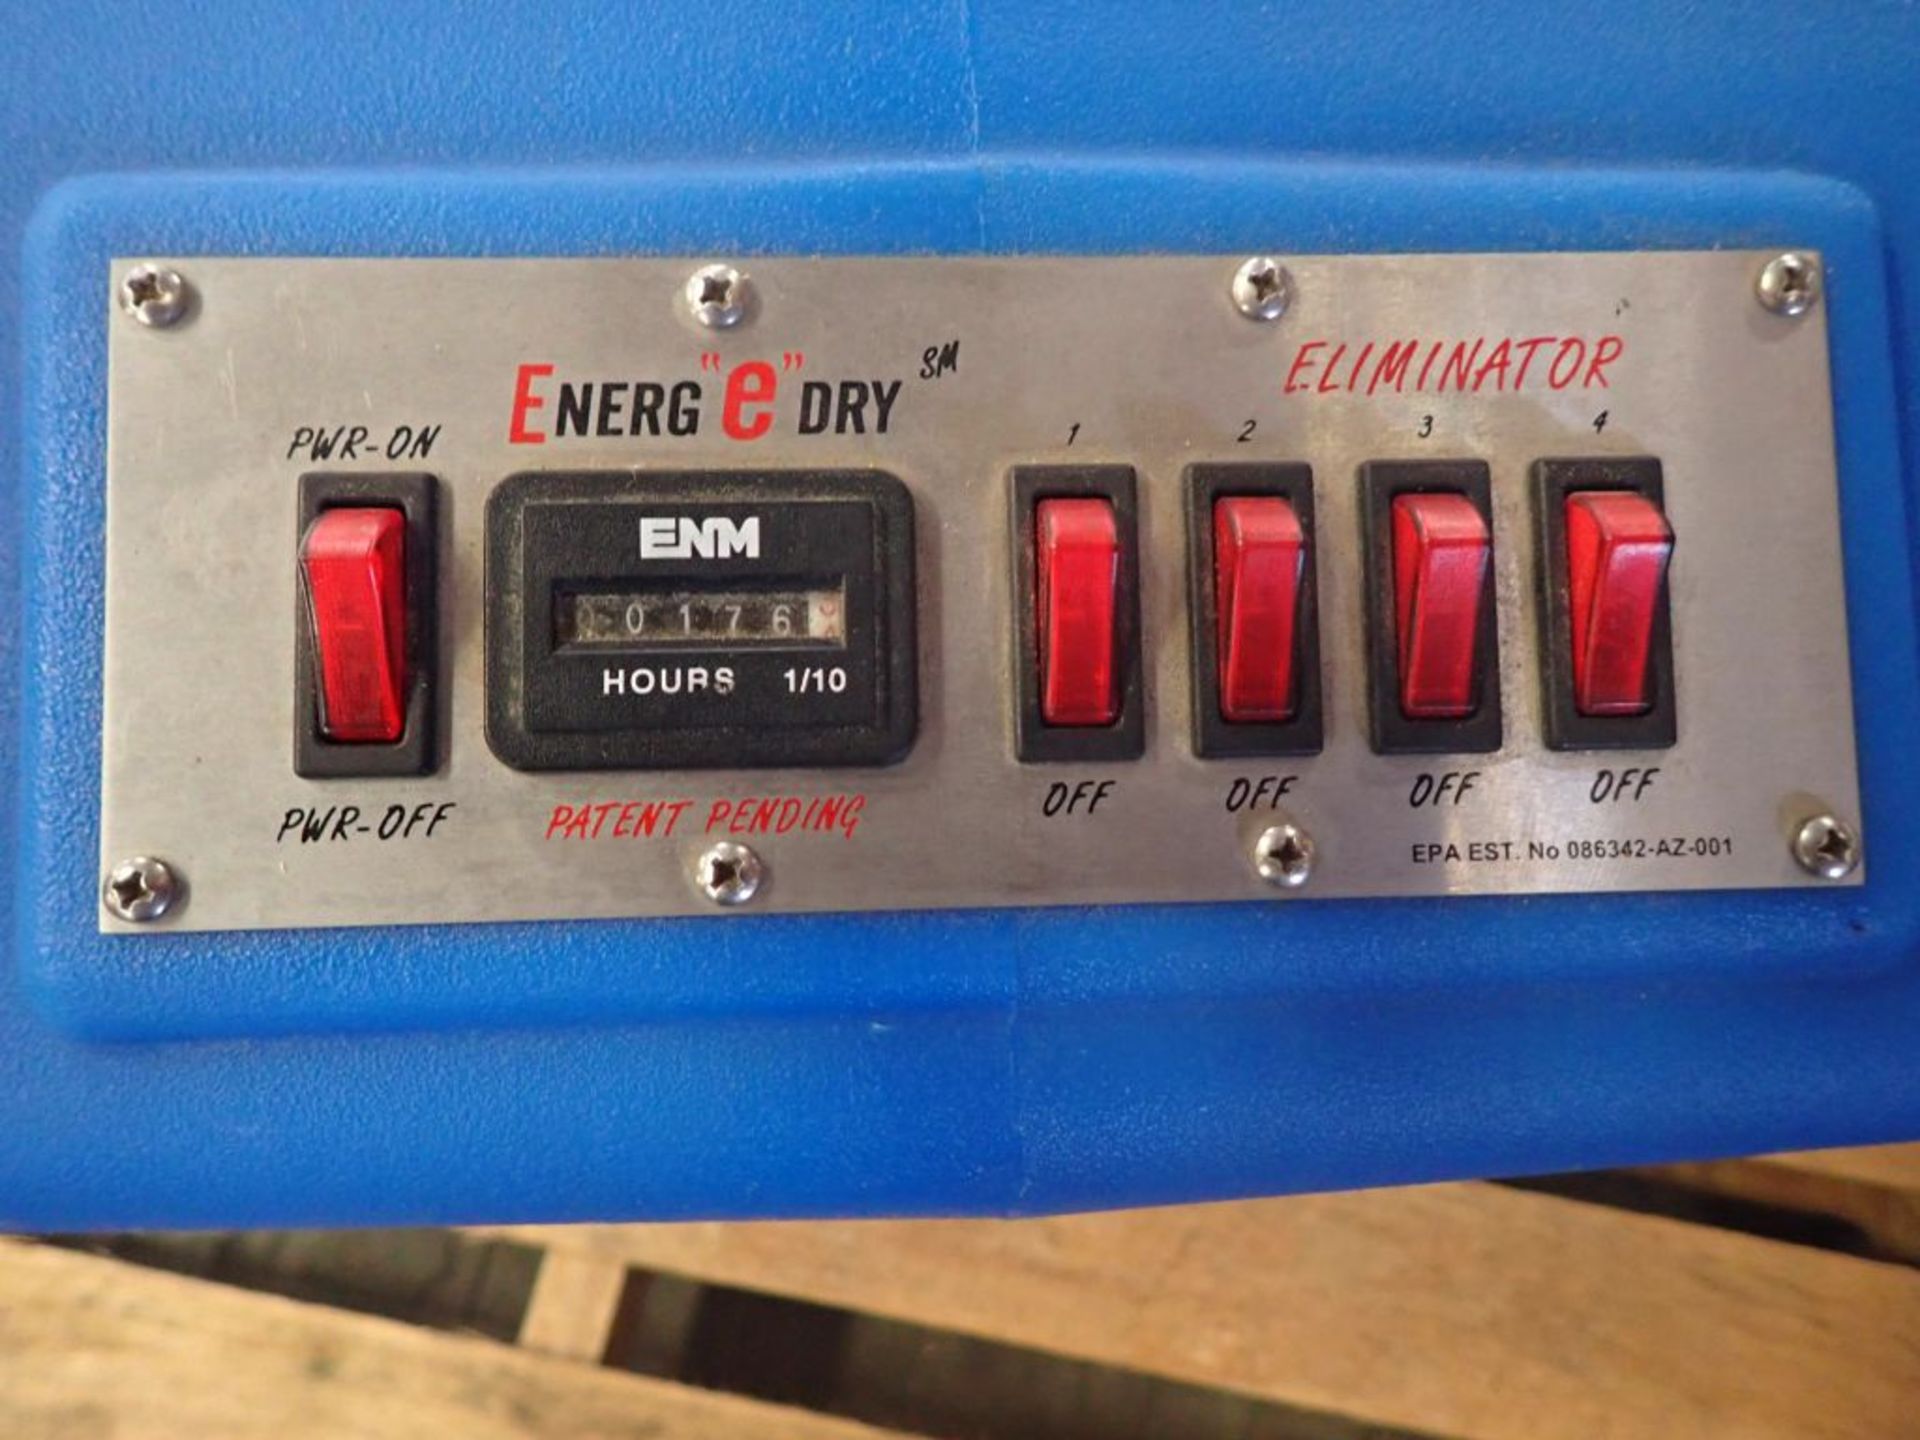 Energe Dry Eliminator Heater - Image 6 of 6